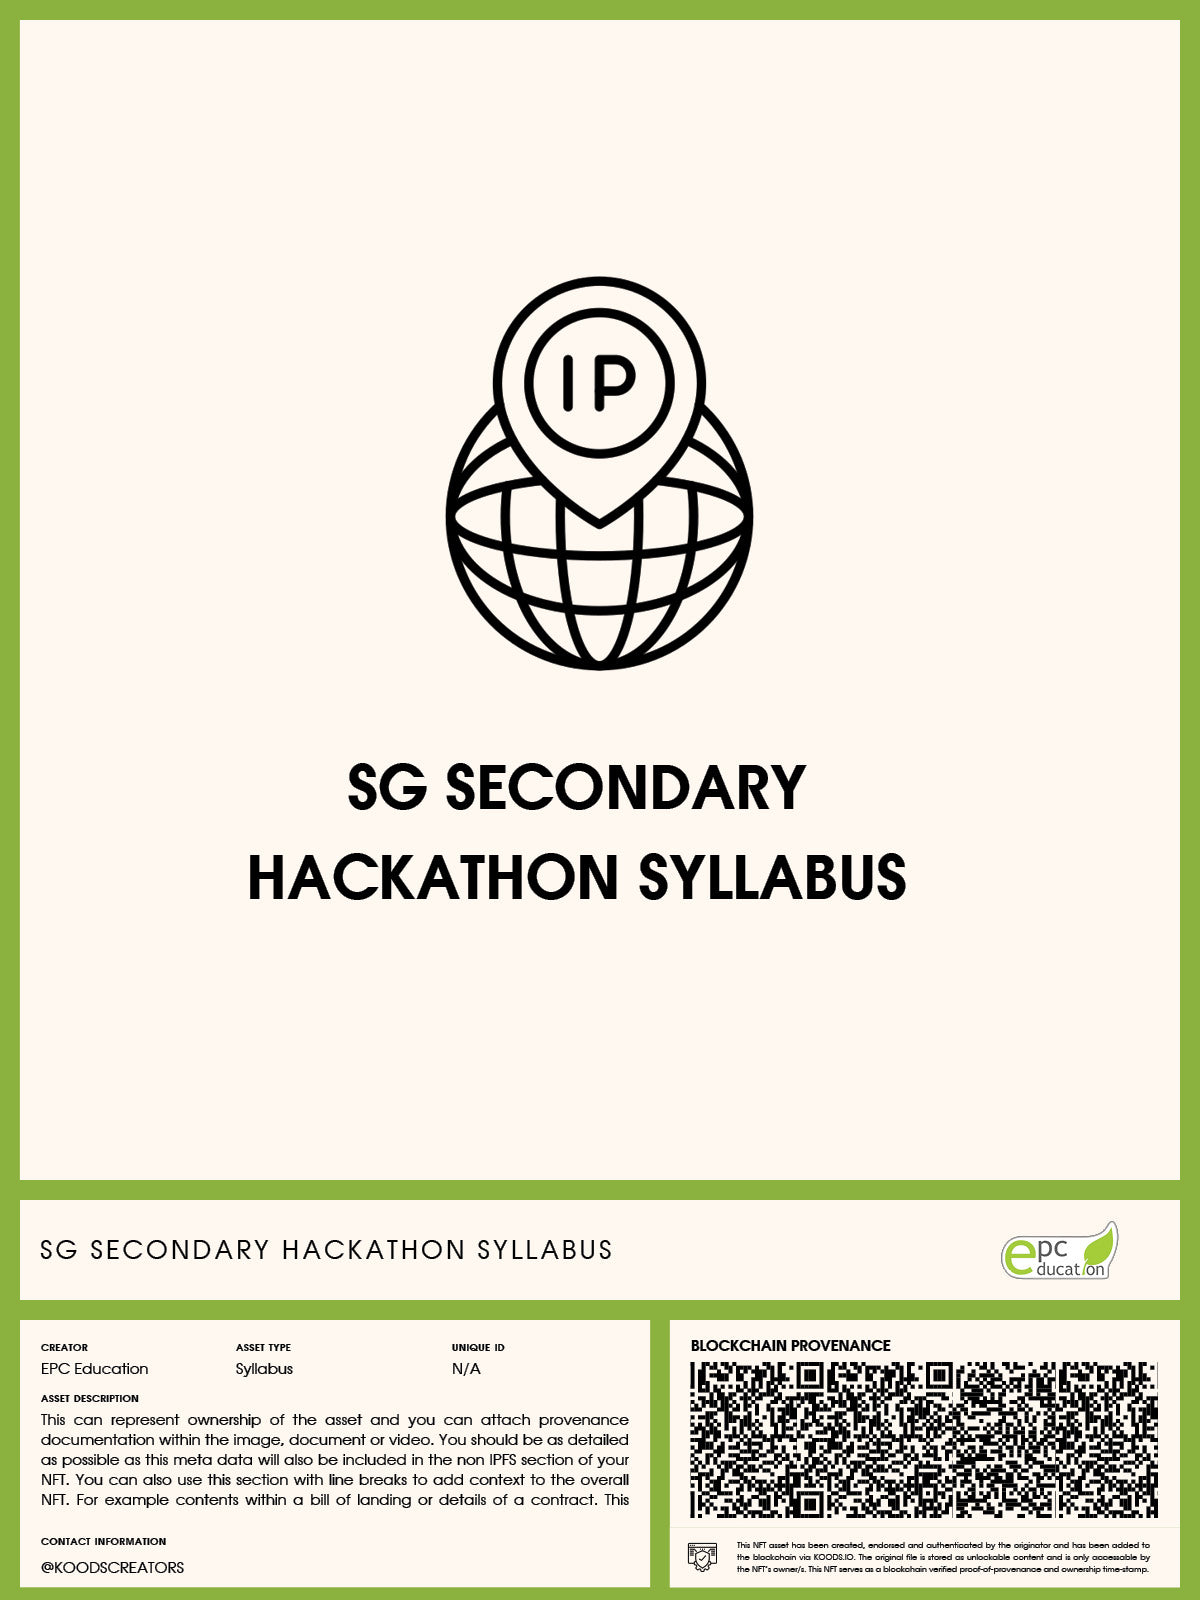 SG secondary hackathon syllabus